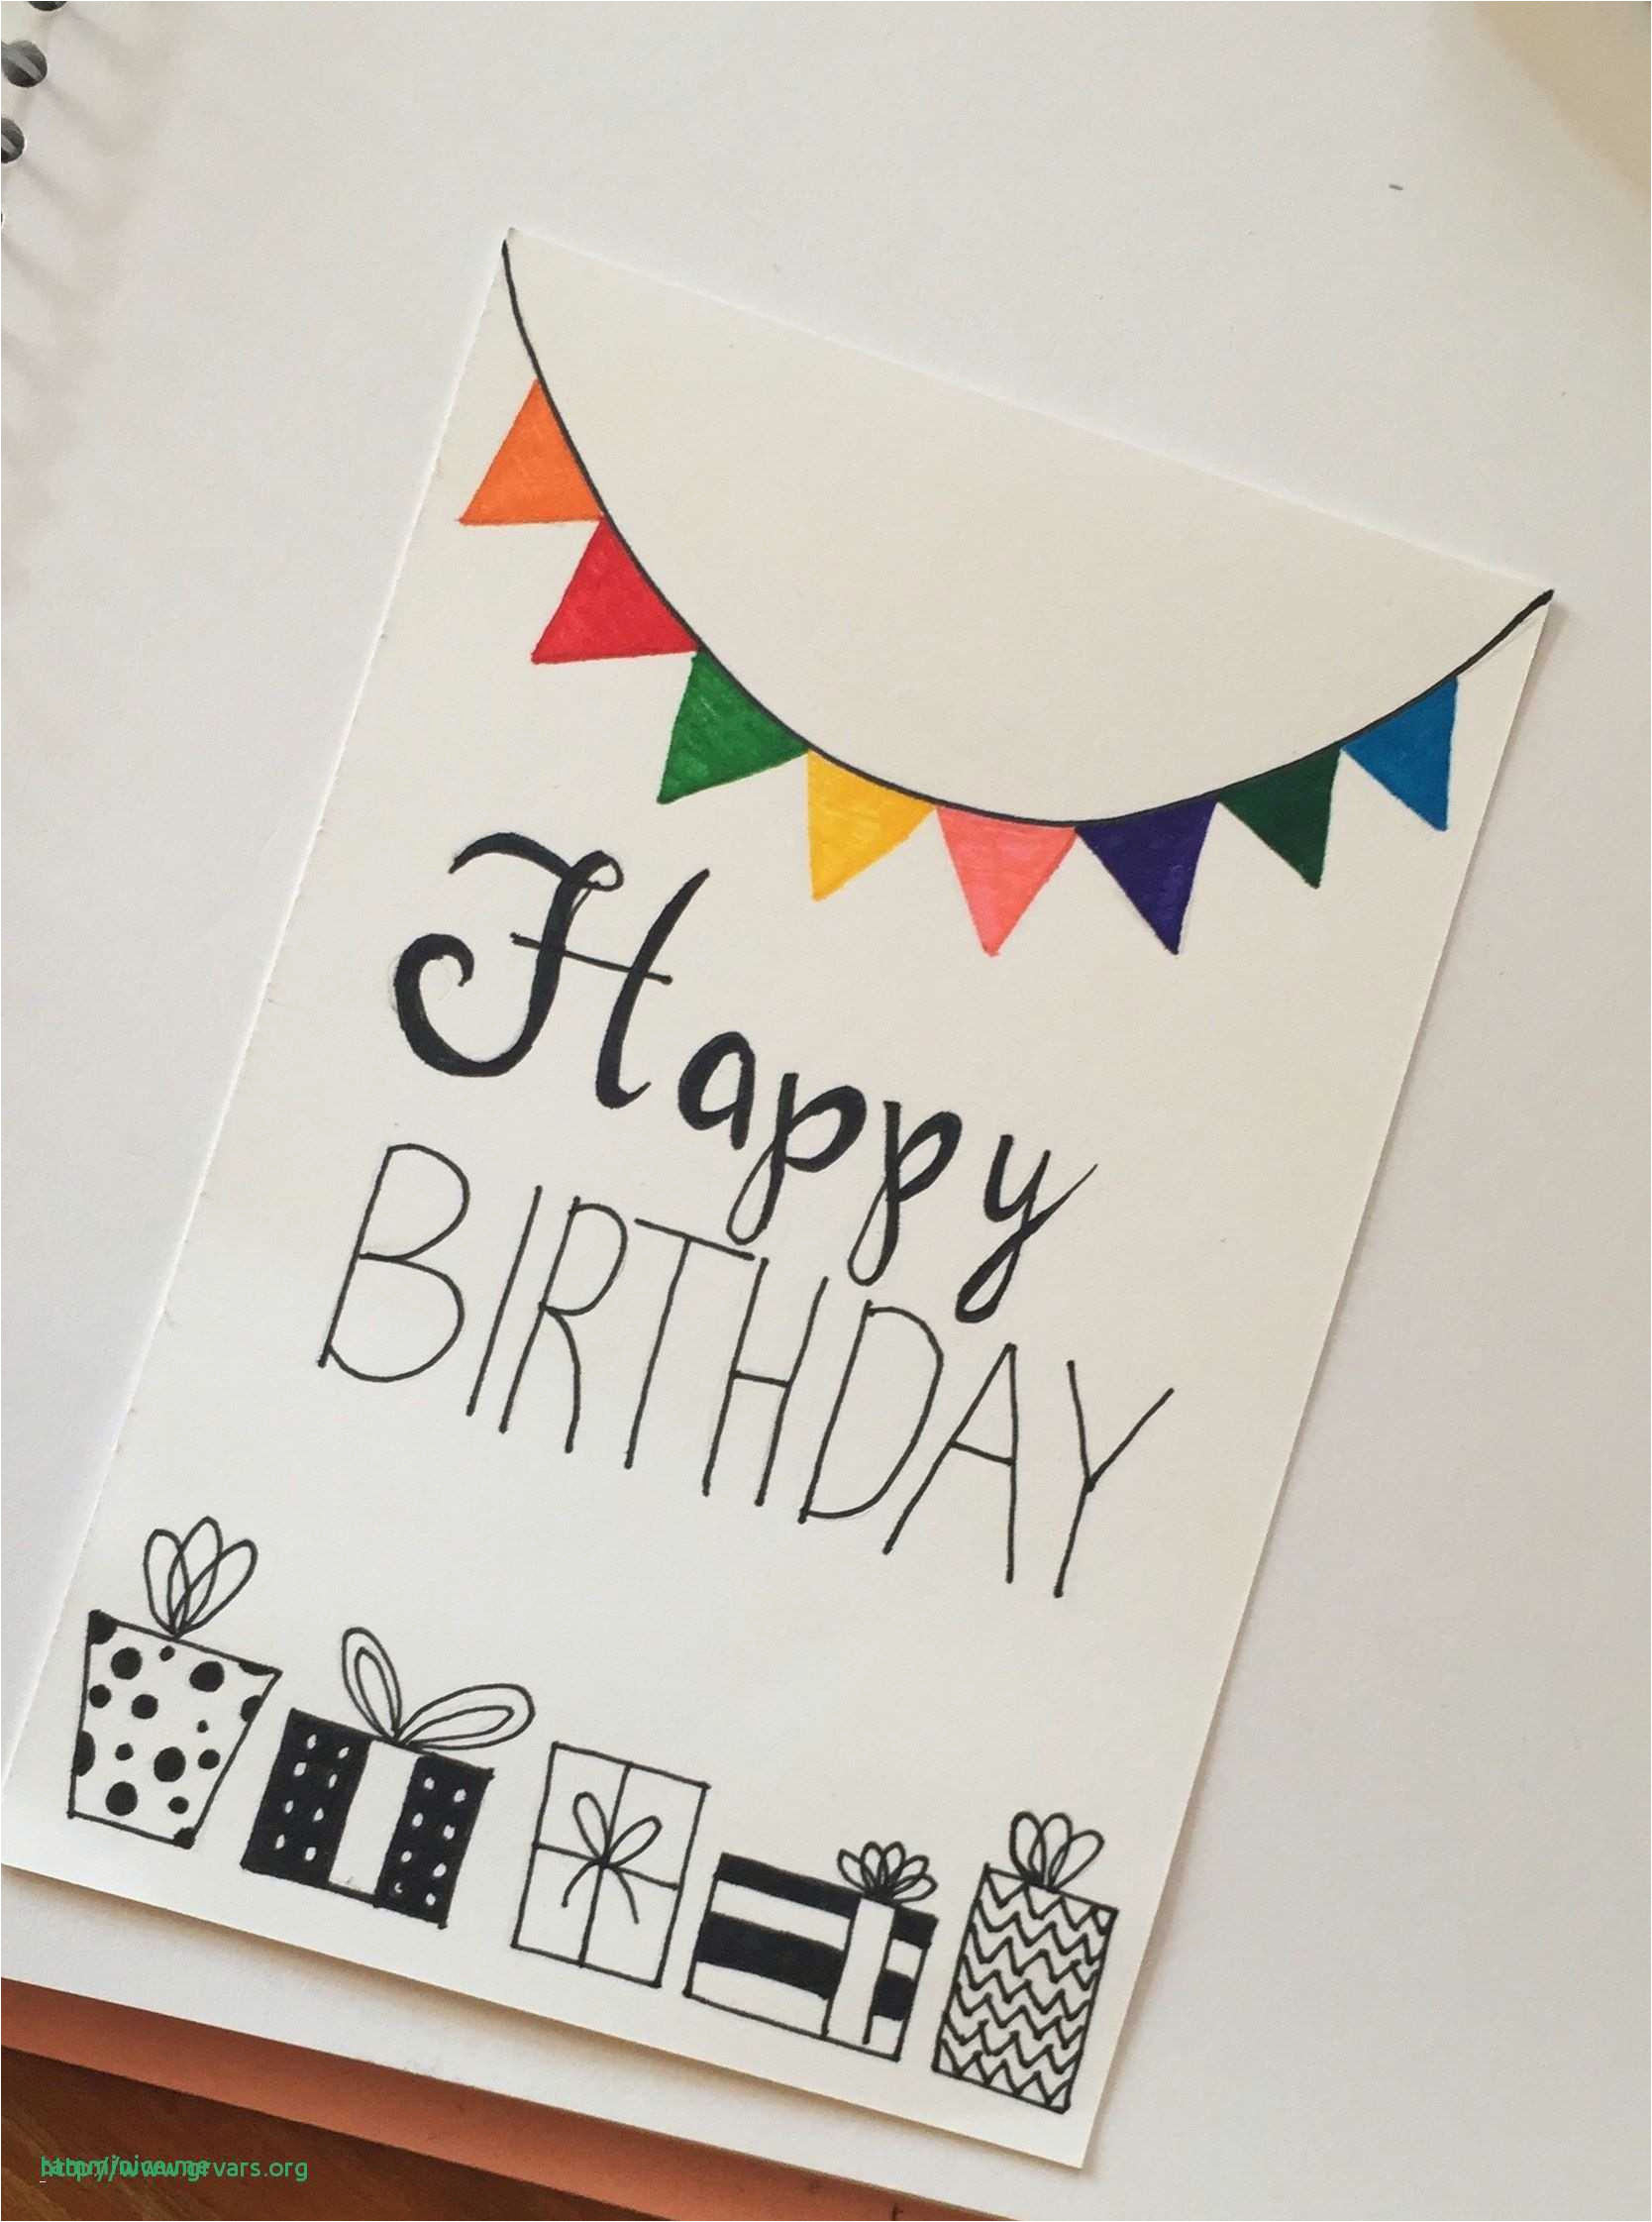 Making Birthday Cards Ideas Diy Birthday Cards Simple Simple Handmade Birthday Cards Awesome